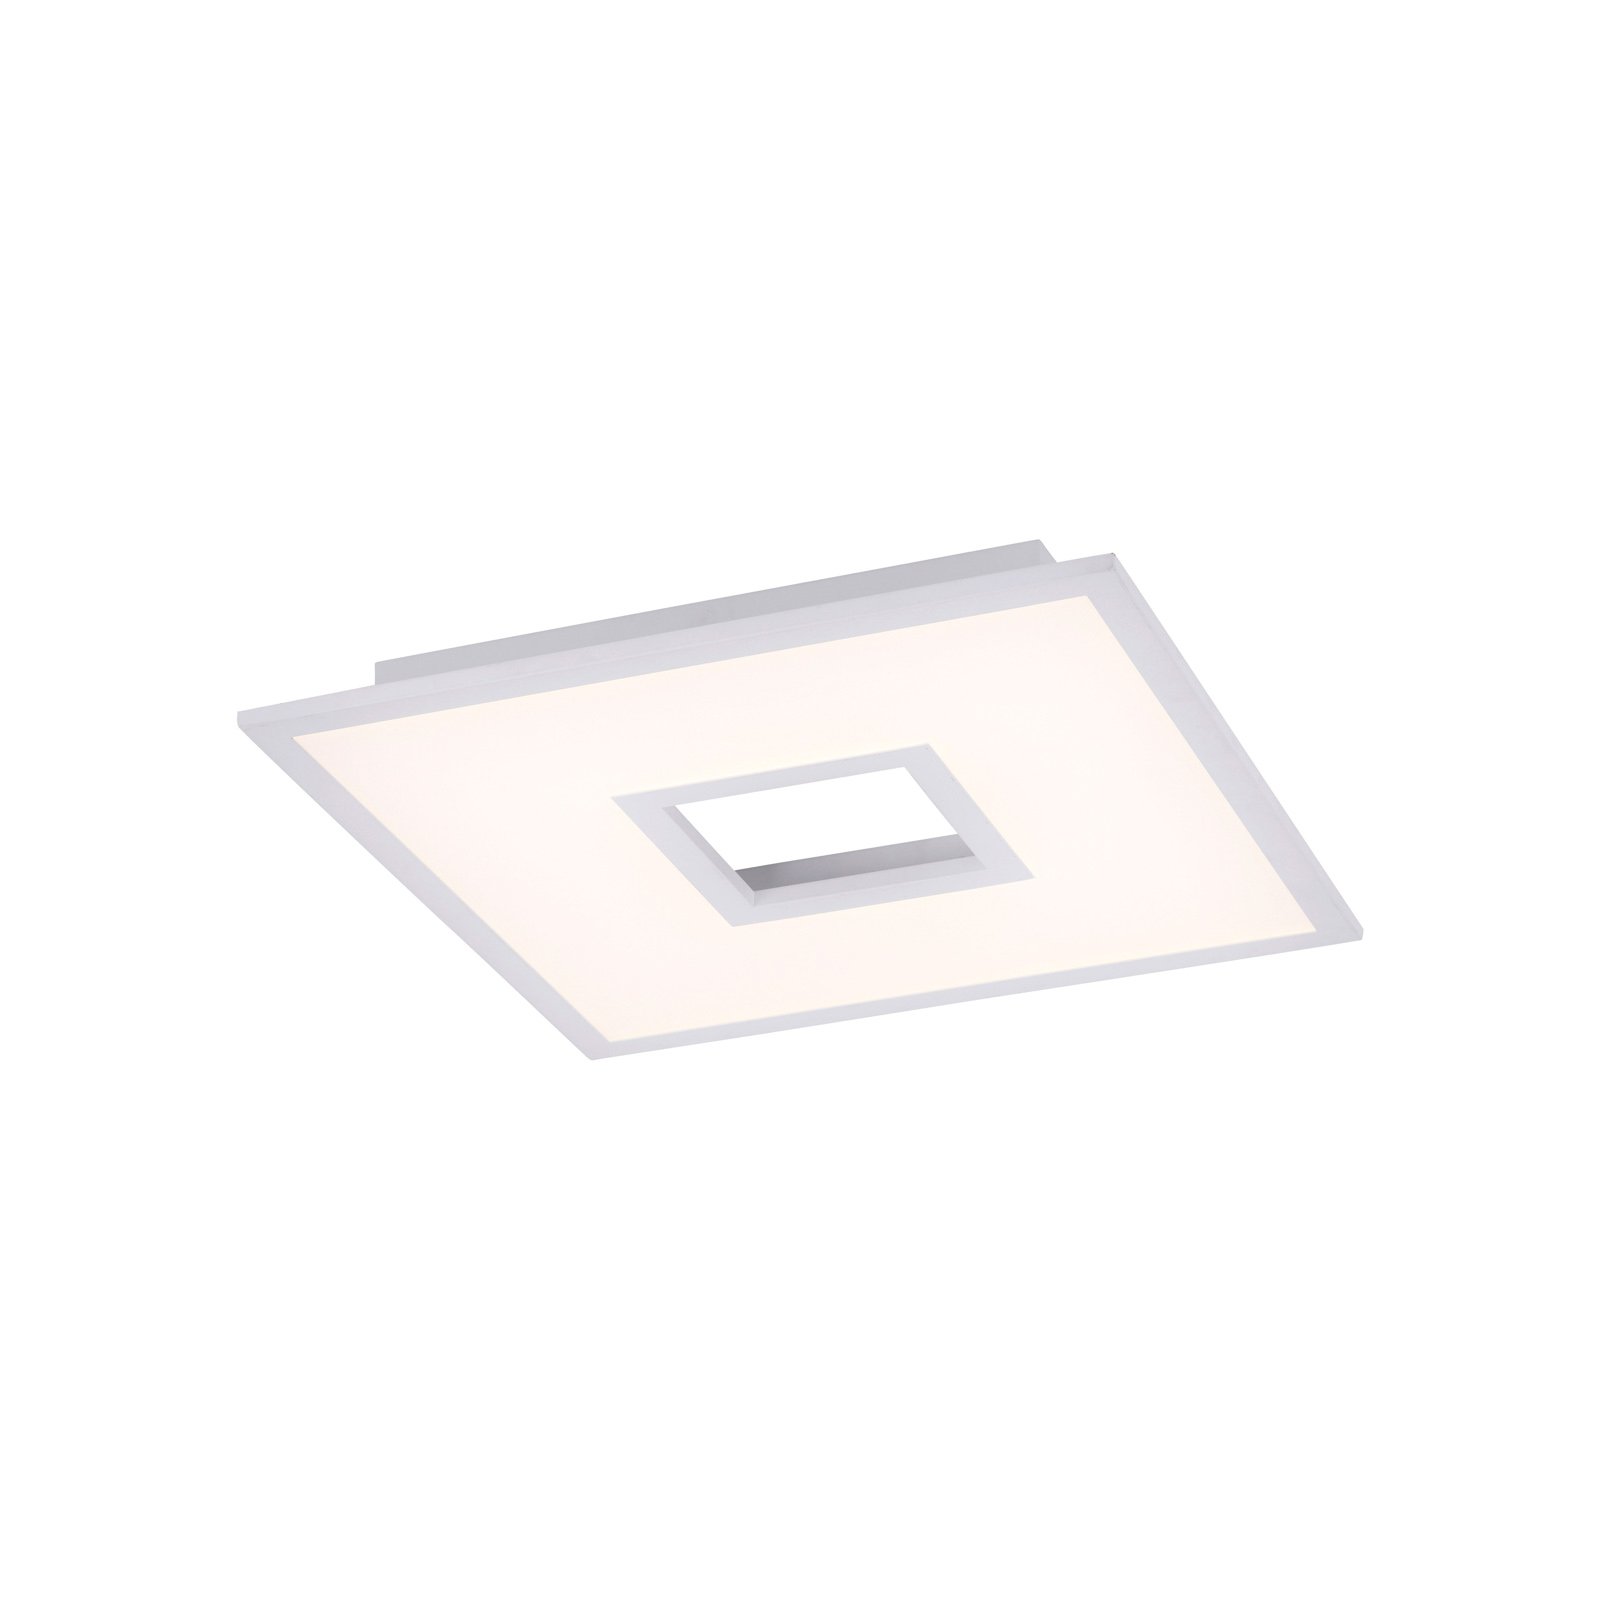 Recess LED ceiling light, remote control RGBW